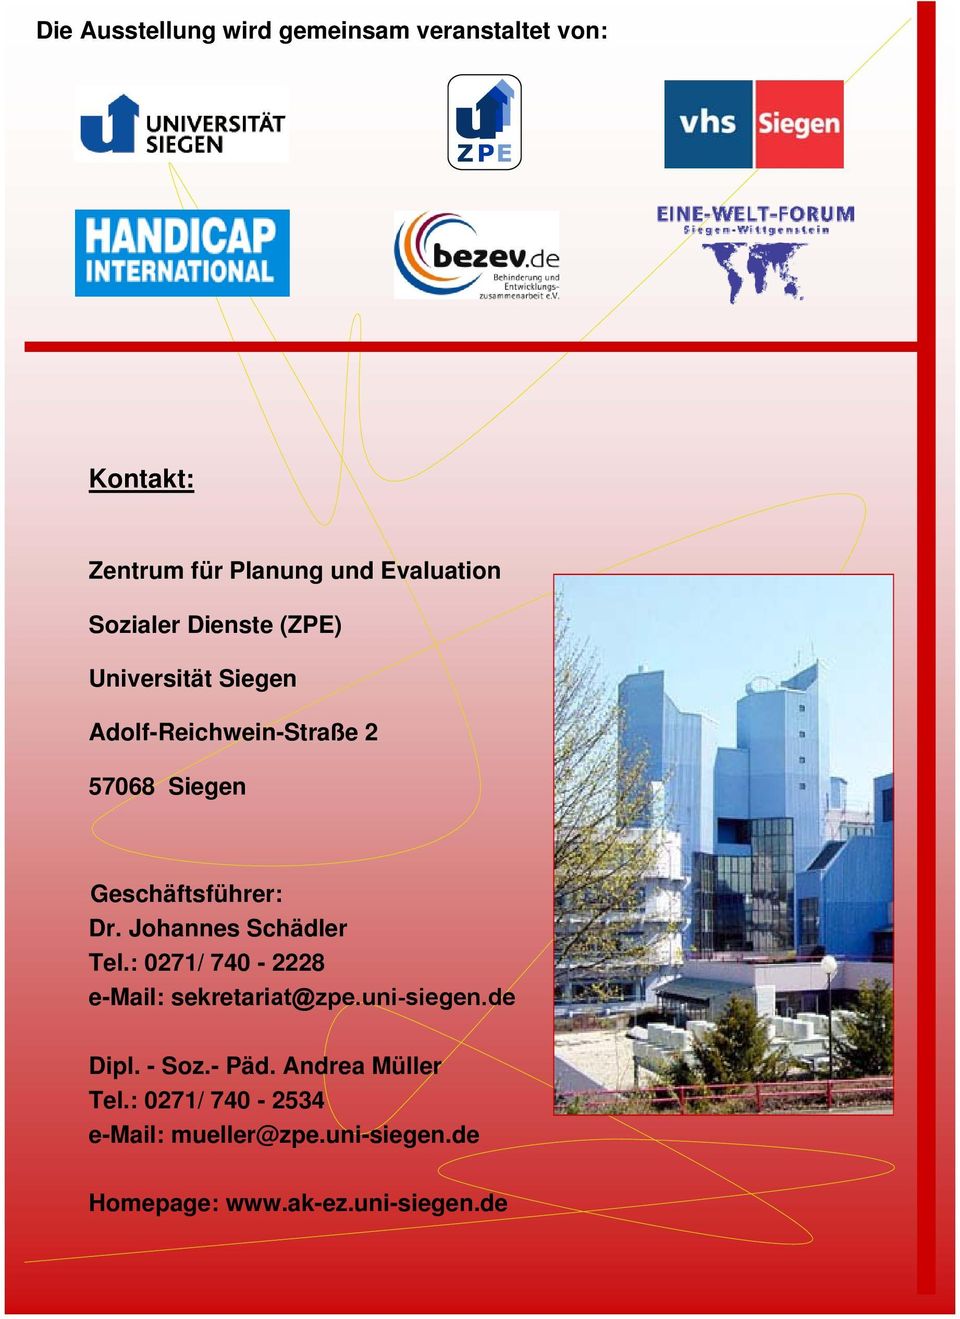 Dr. Johannes Schädler Tel.: 0271/ 740-2228 e-mail: sekretariat@zpe.uni-siegen.de Dipl. - Soz.